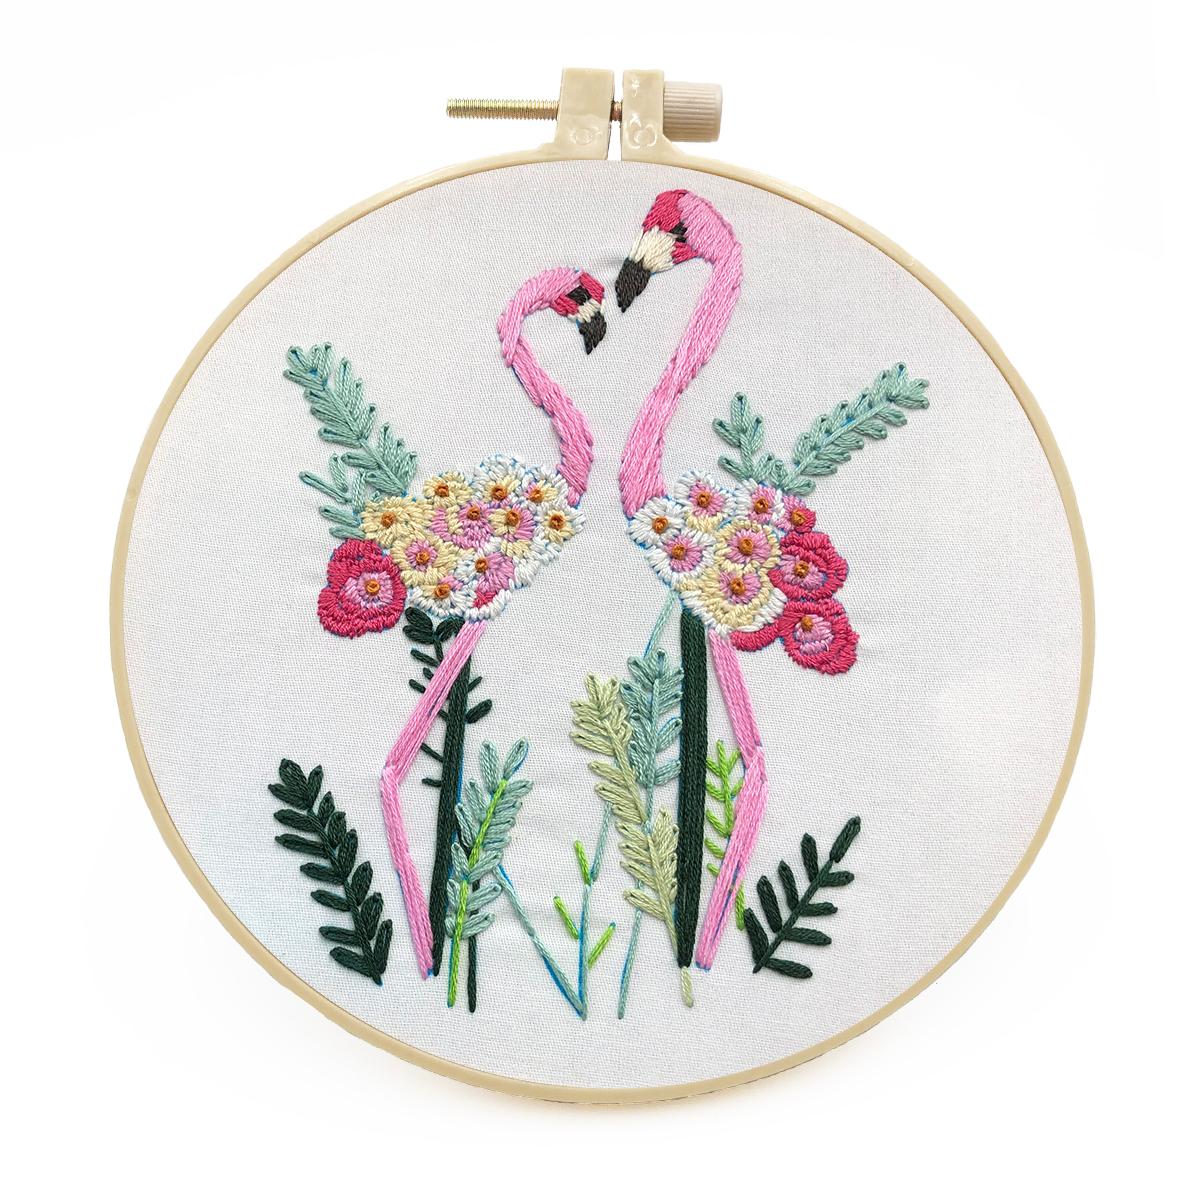 Embroidery Starter Kit Cross stitch kit for Adult Beginner -Flamingo pattern